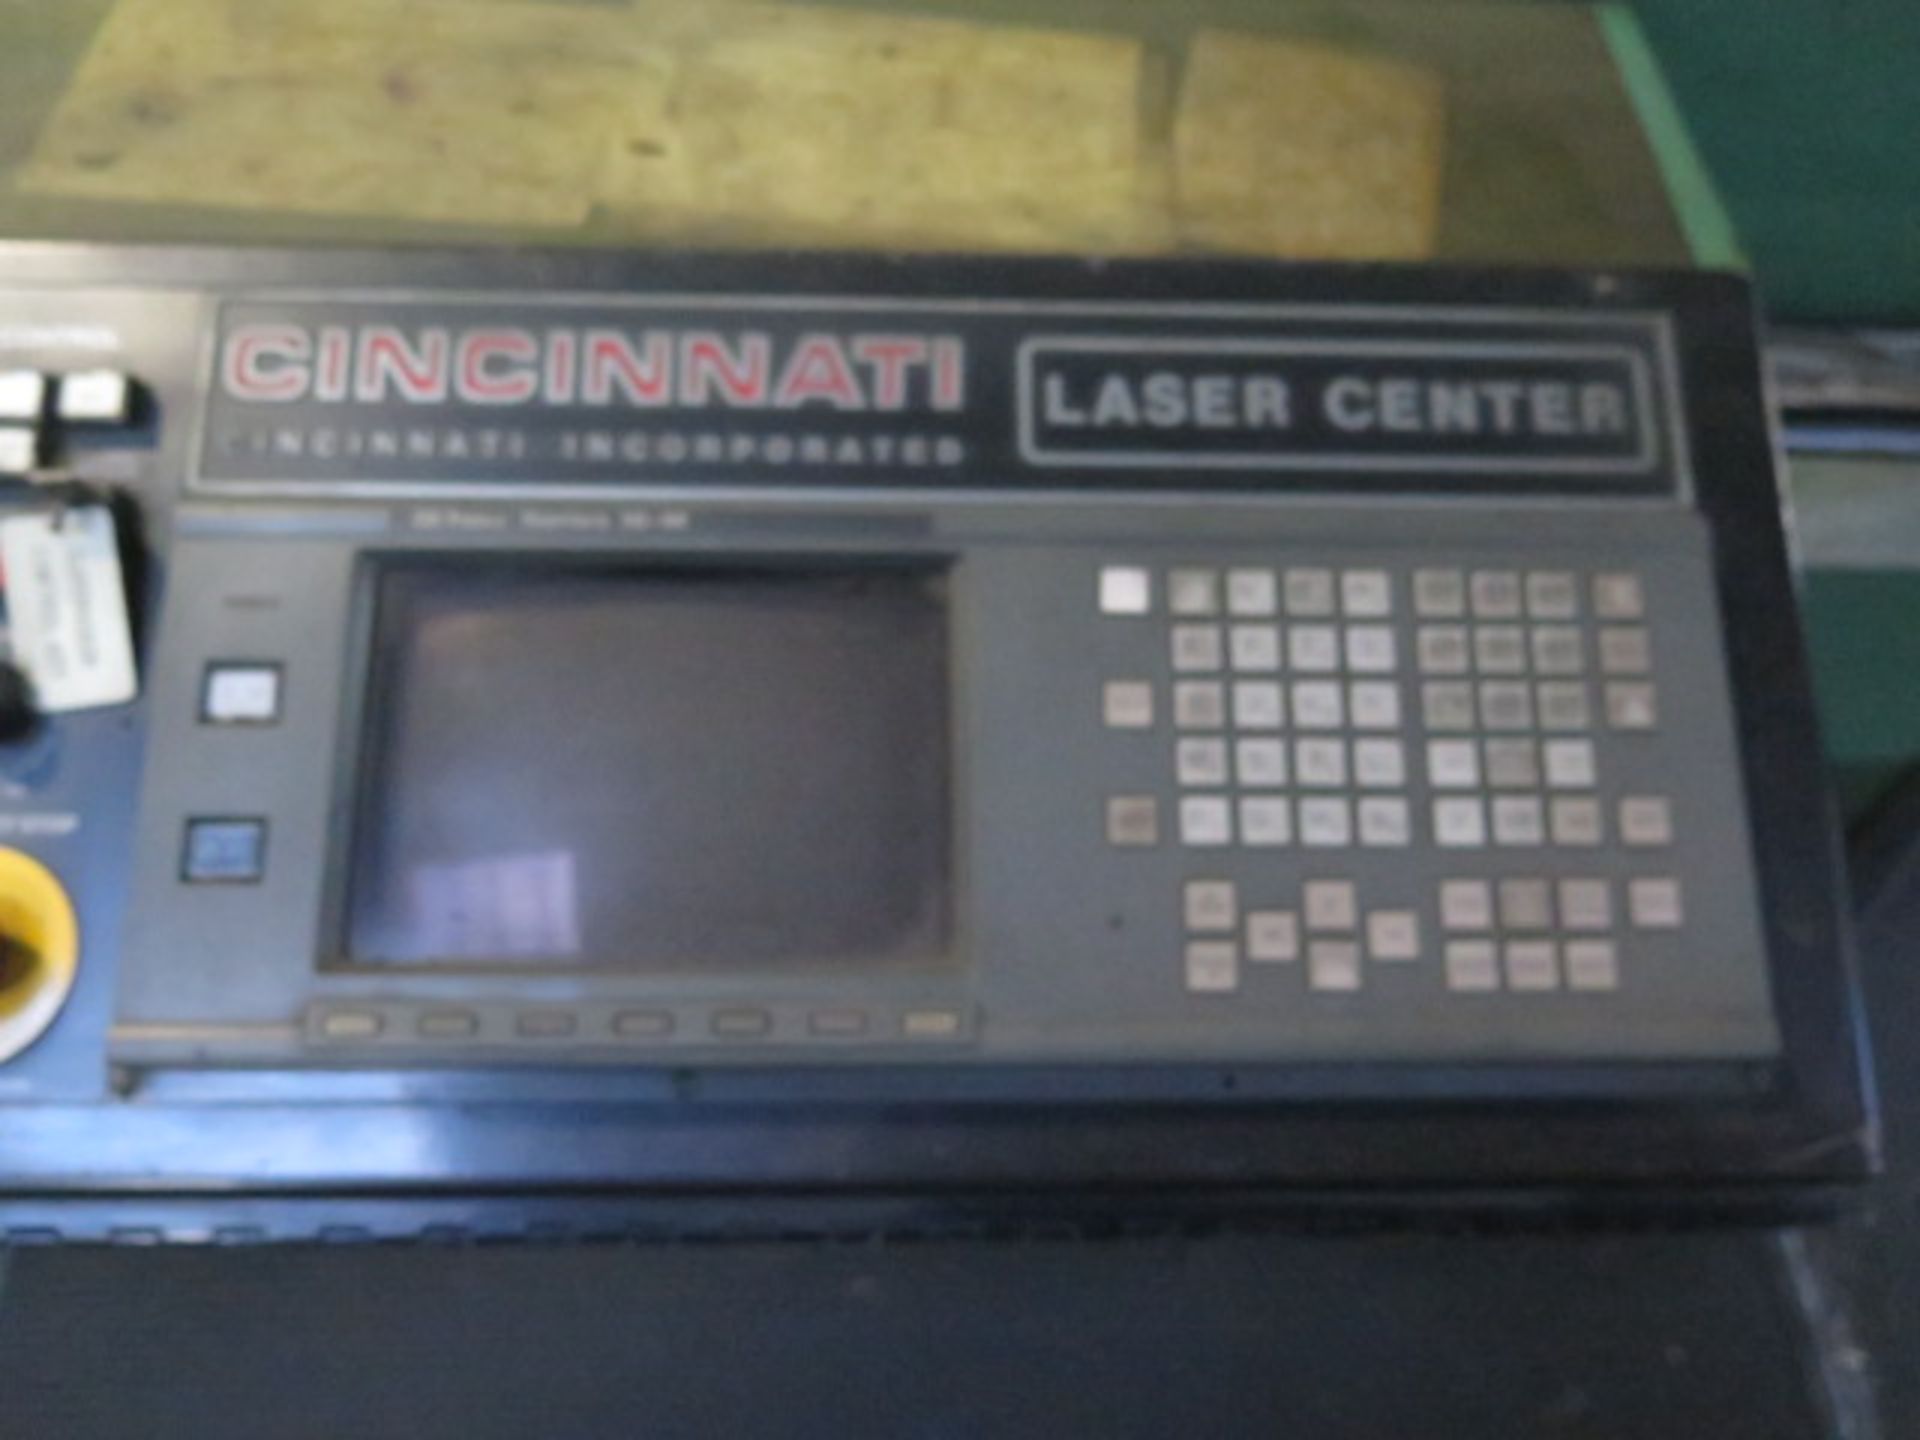 1995 Cincinnati mdl. CL-7A “Laser Center” 2-Shuttle CNC Laser Contour Cutting Machine s/n 48953 w/ - Image 4 of 23